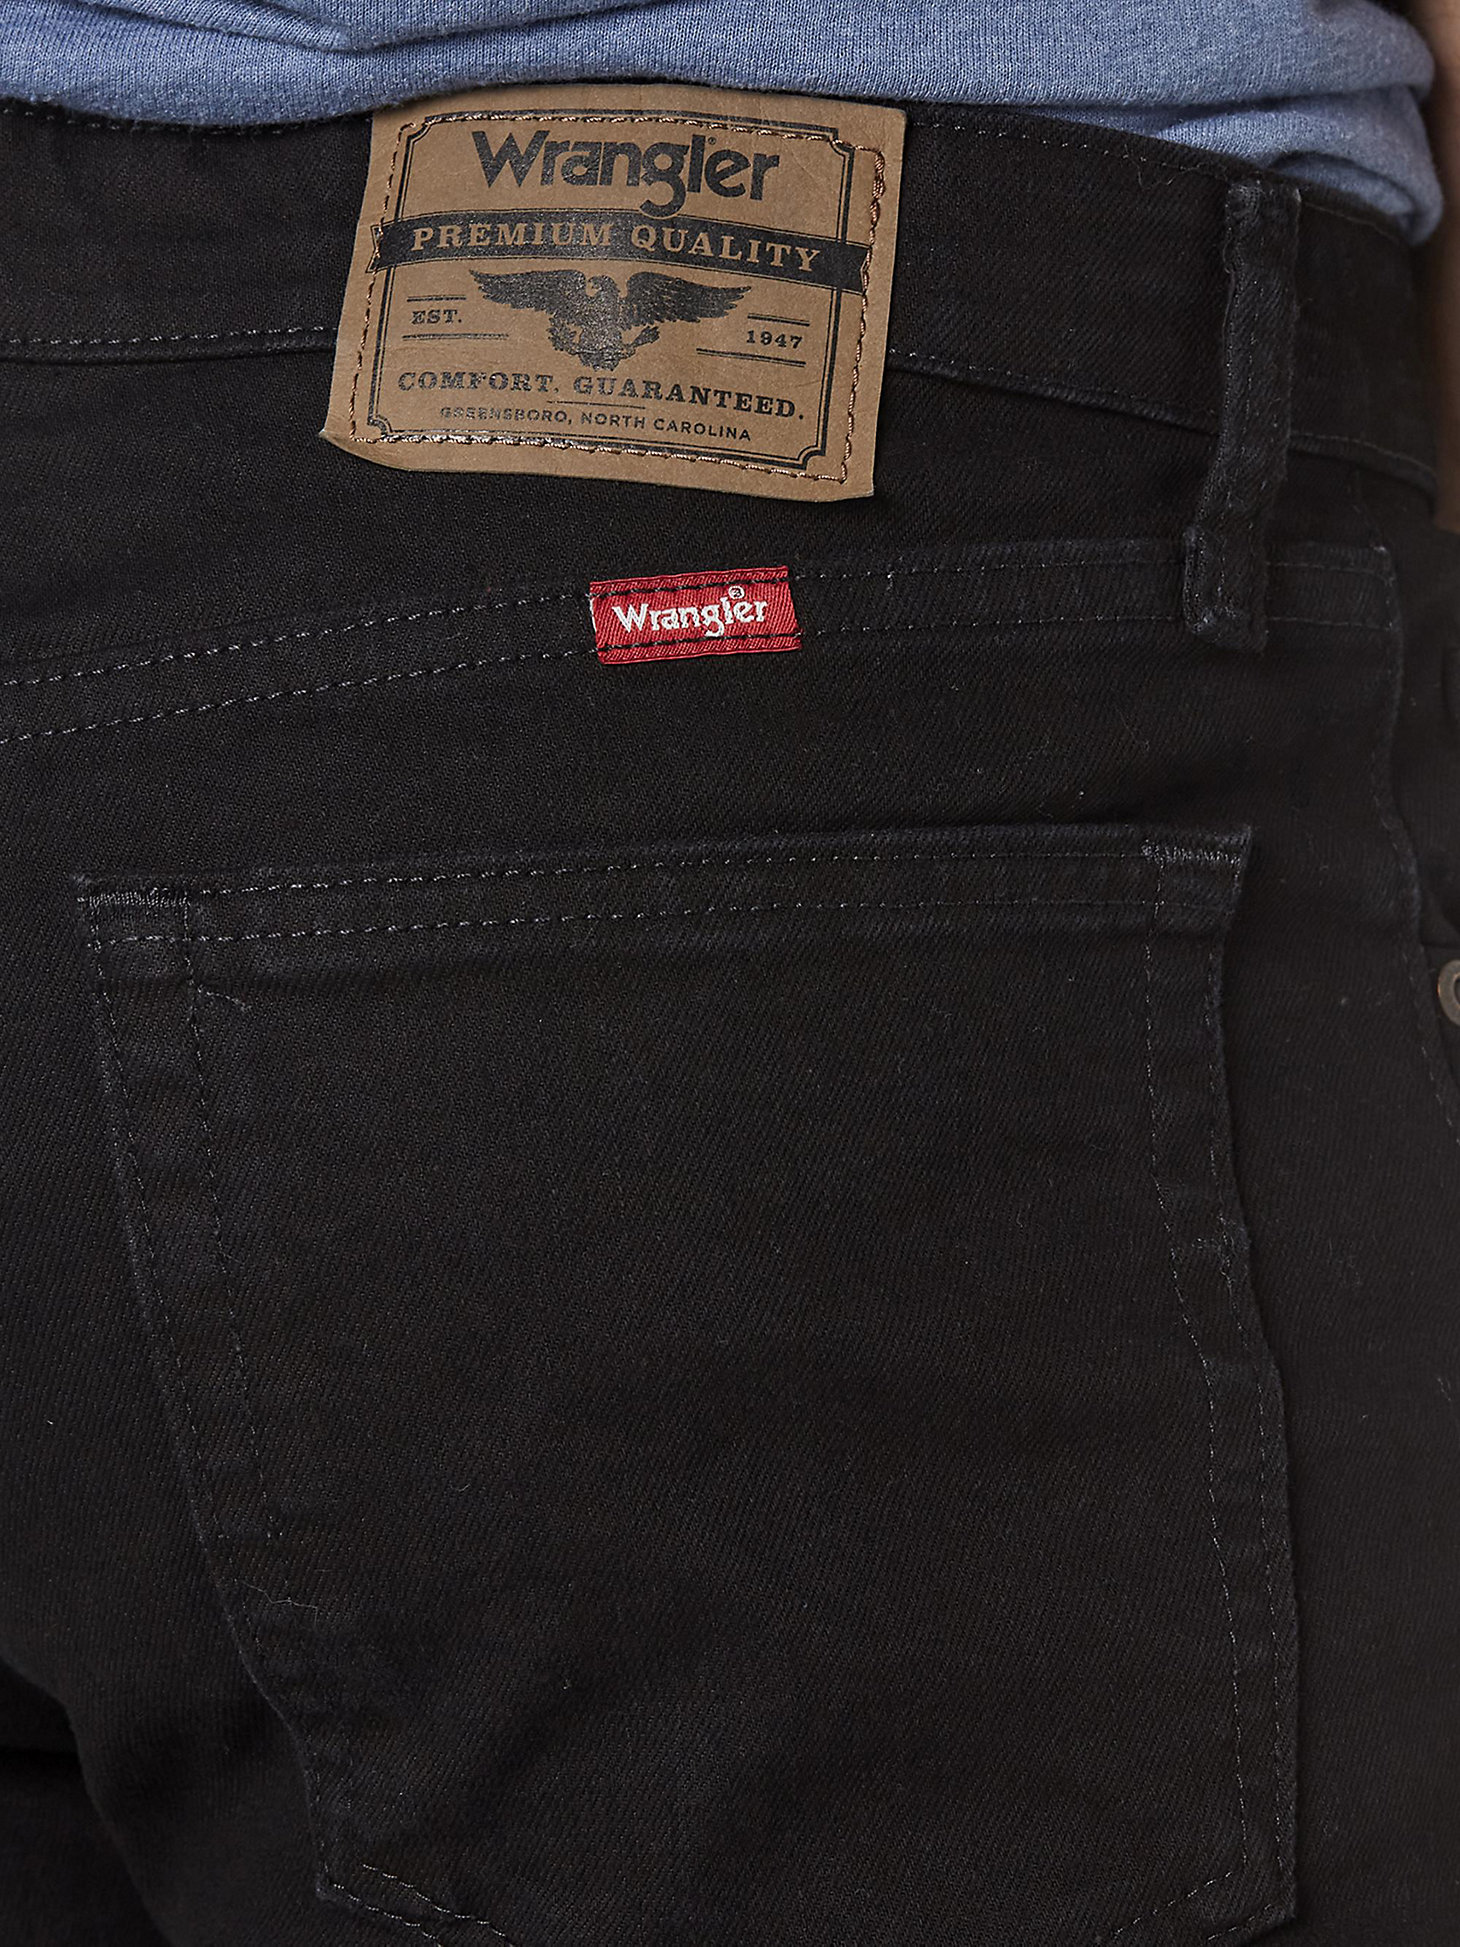 Wrangler® Five Star Premium Performance Series Regular Fit Jean in Black alternative view 2